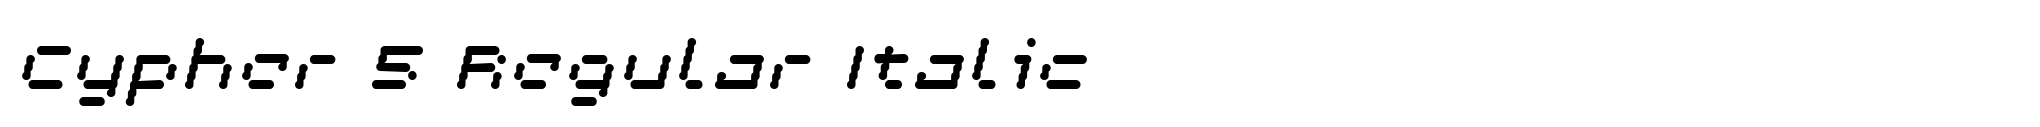 Cypher 5 Regular Italic image